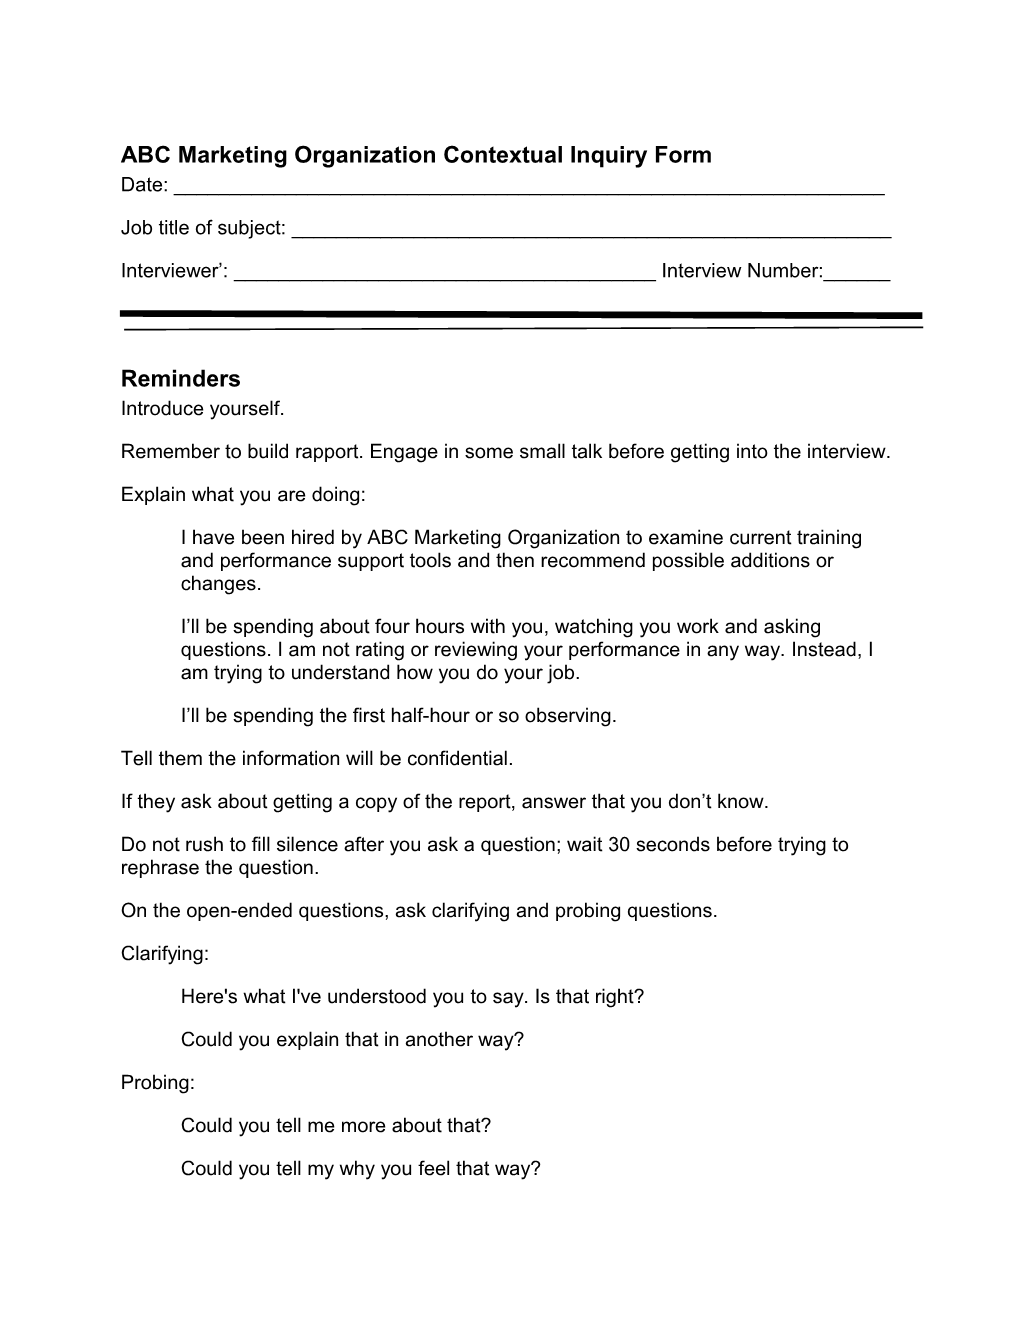 ABC Marketing Organization Contextual Inquiry Form